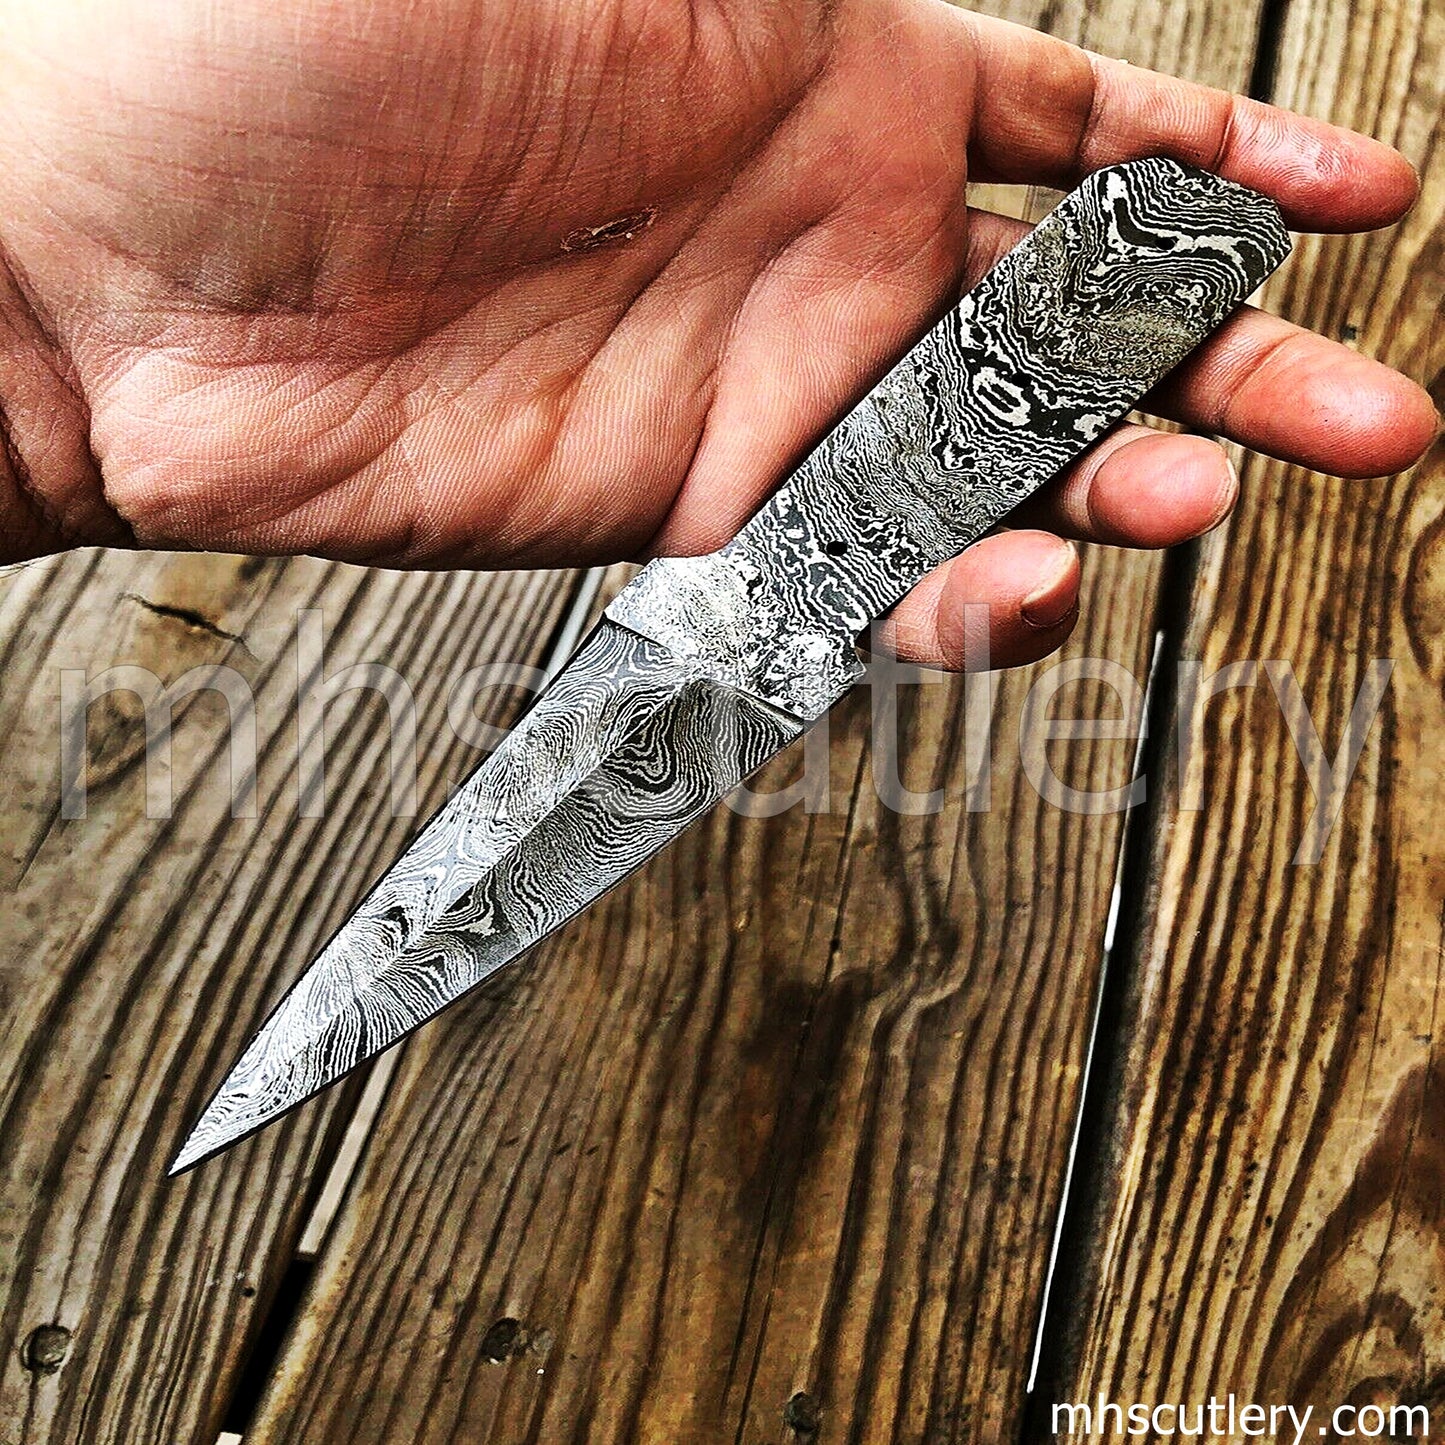 Handmade Damascus Steel Dagger Knife Blank Blade | mhscutlery